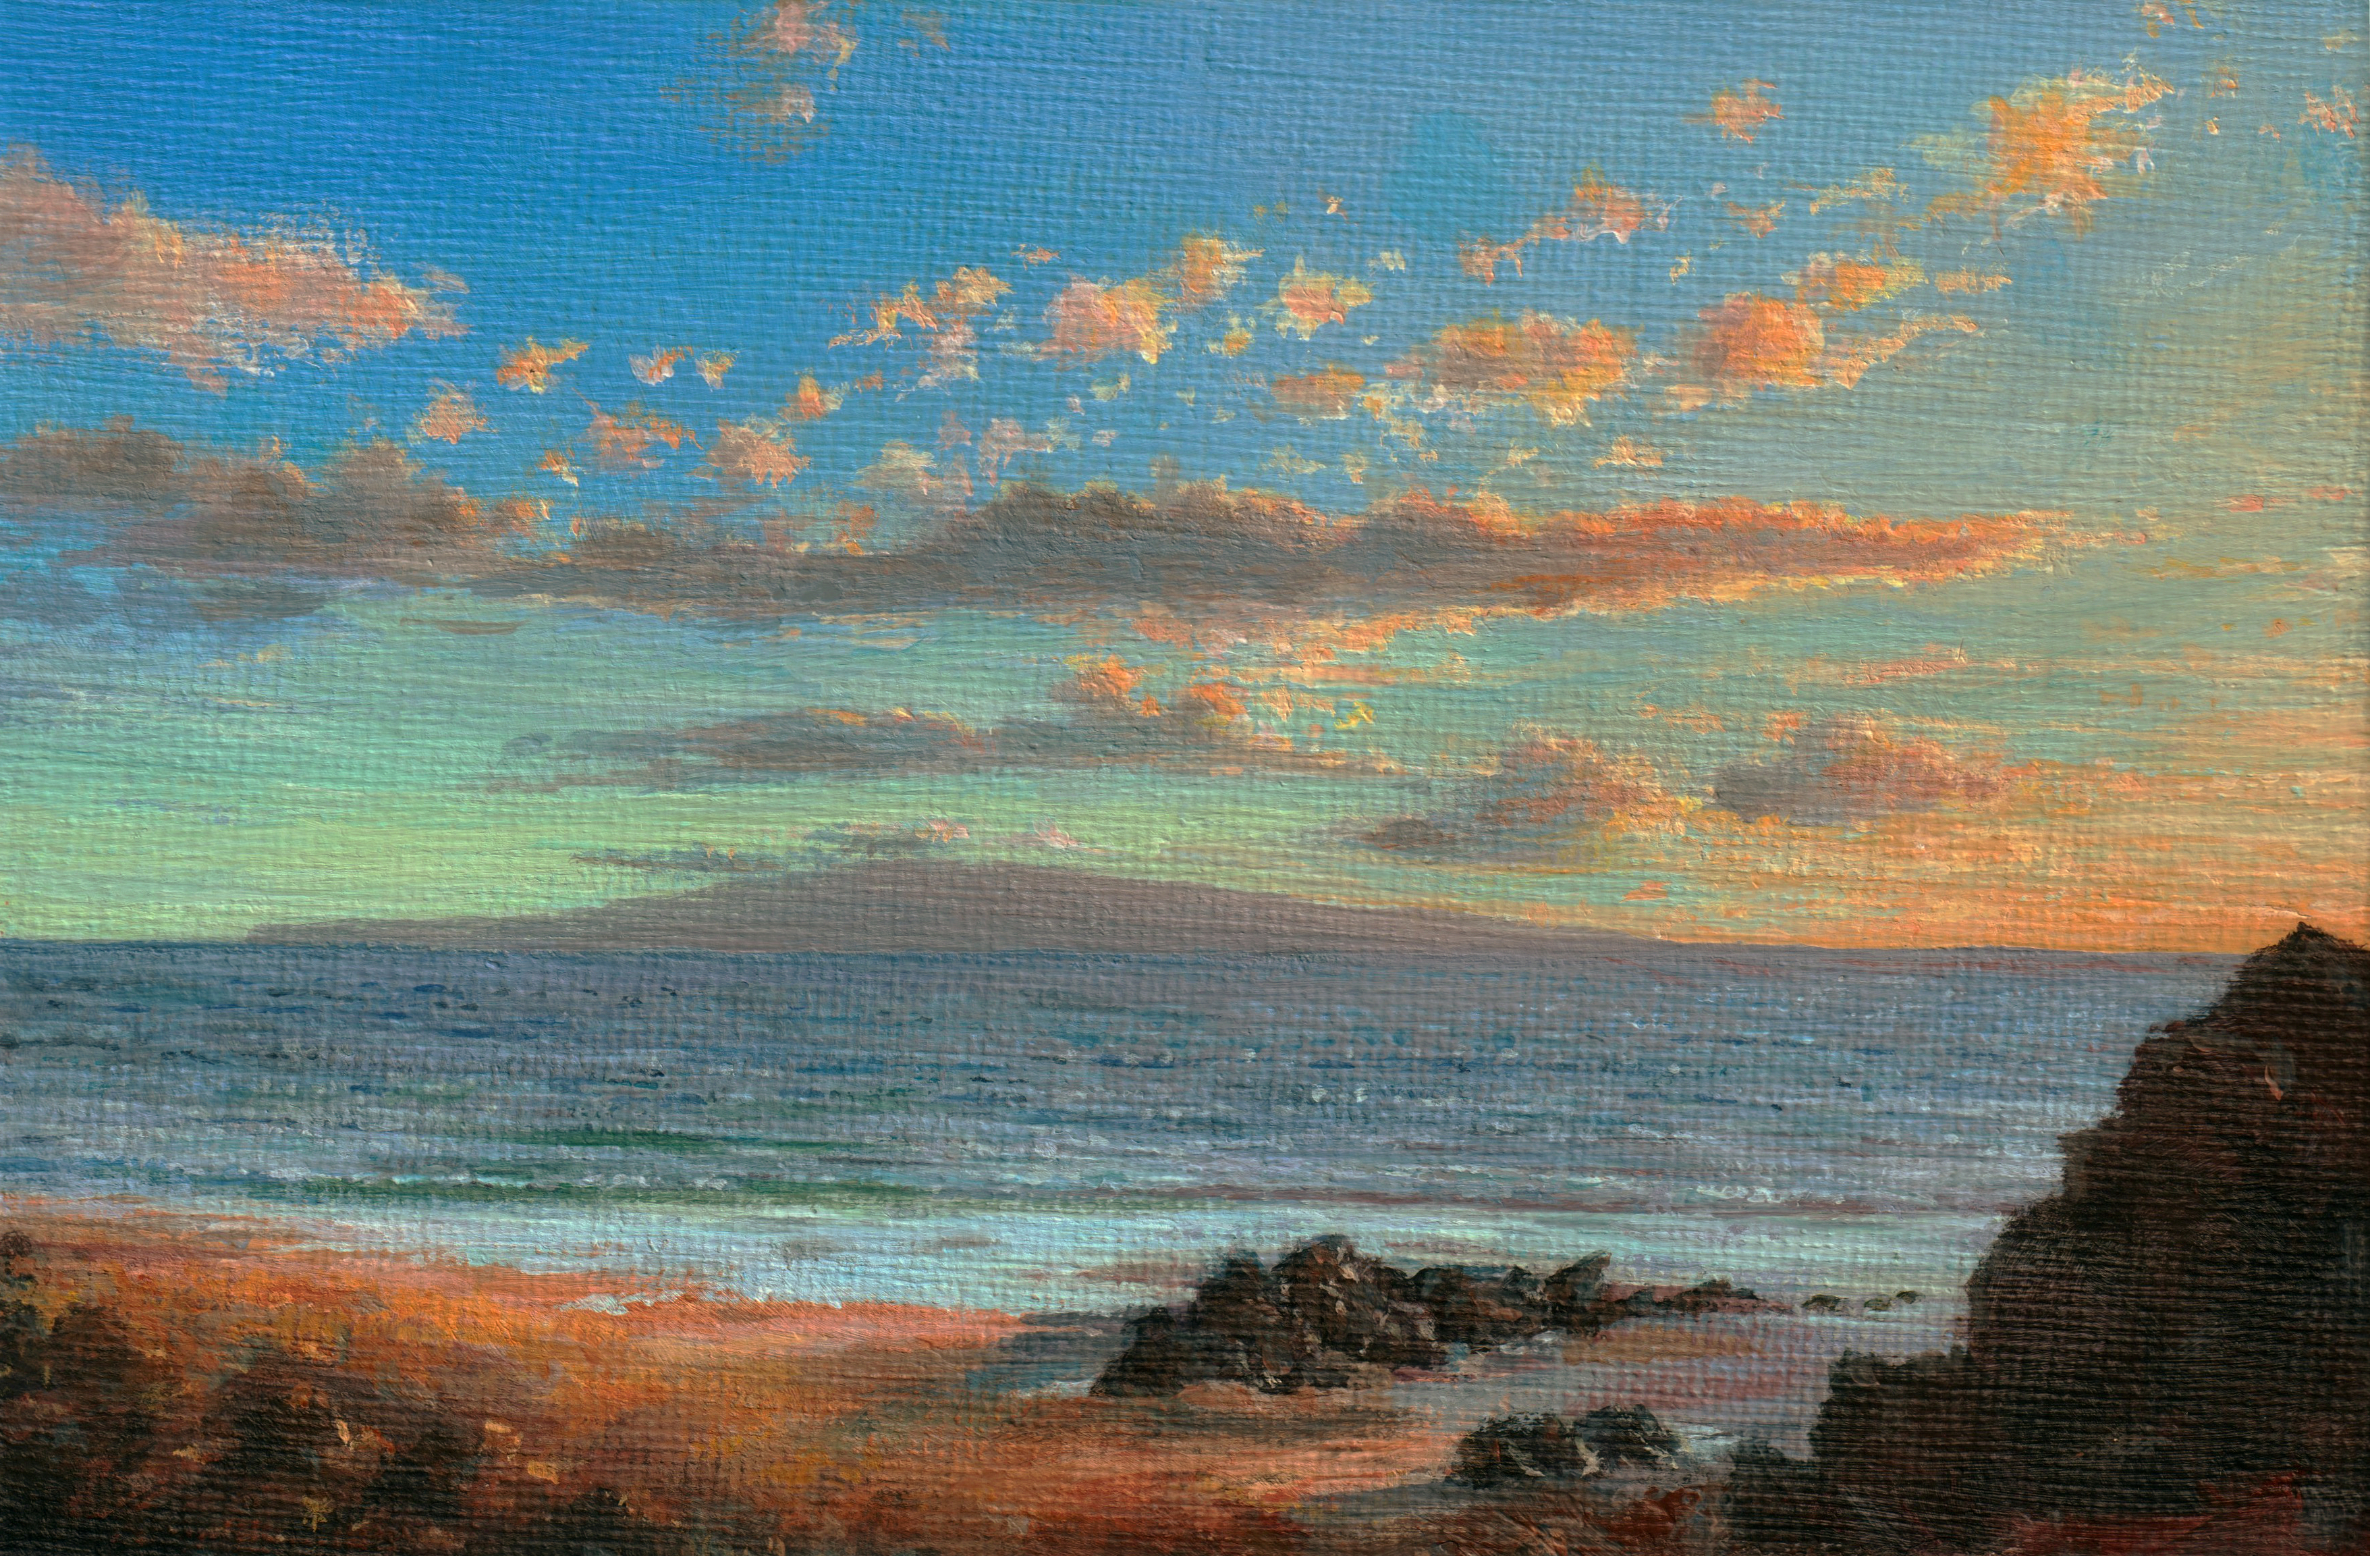 Maui Sunset, Maui, Hawaii - Acrylics on Canvas study (5" x 7"), by Andrew Cunningham